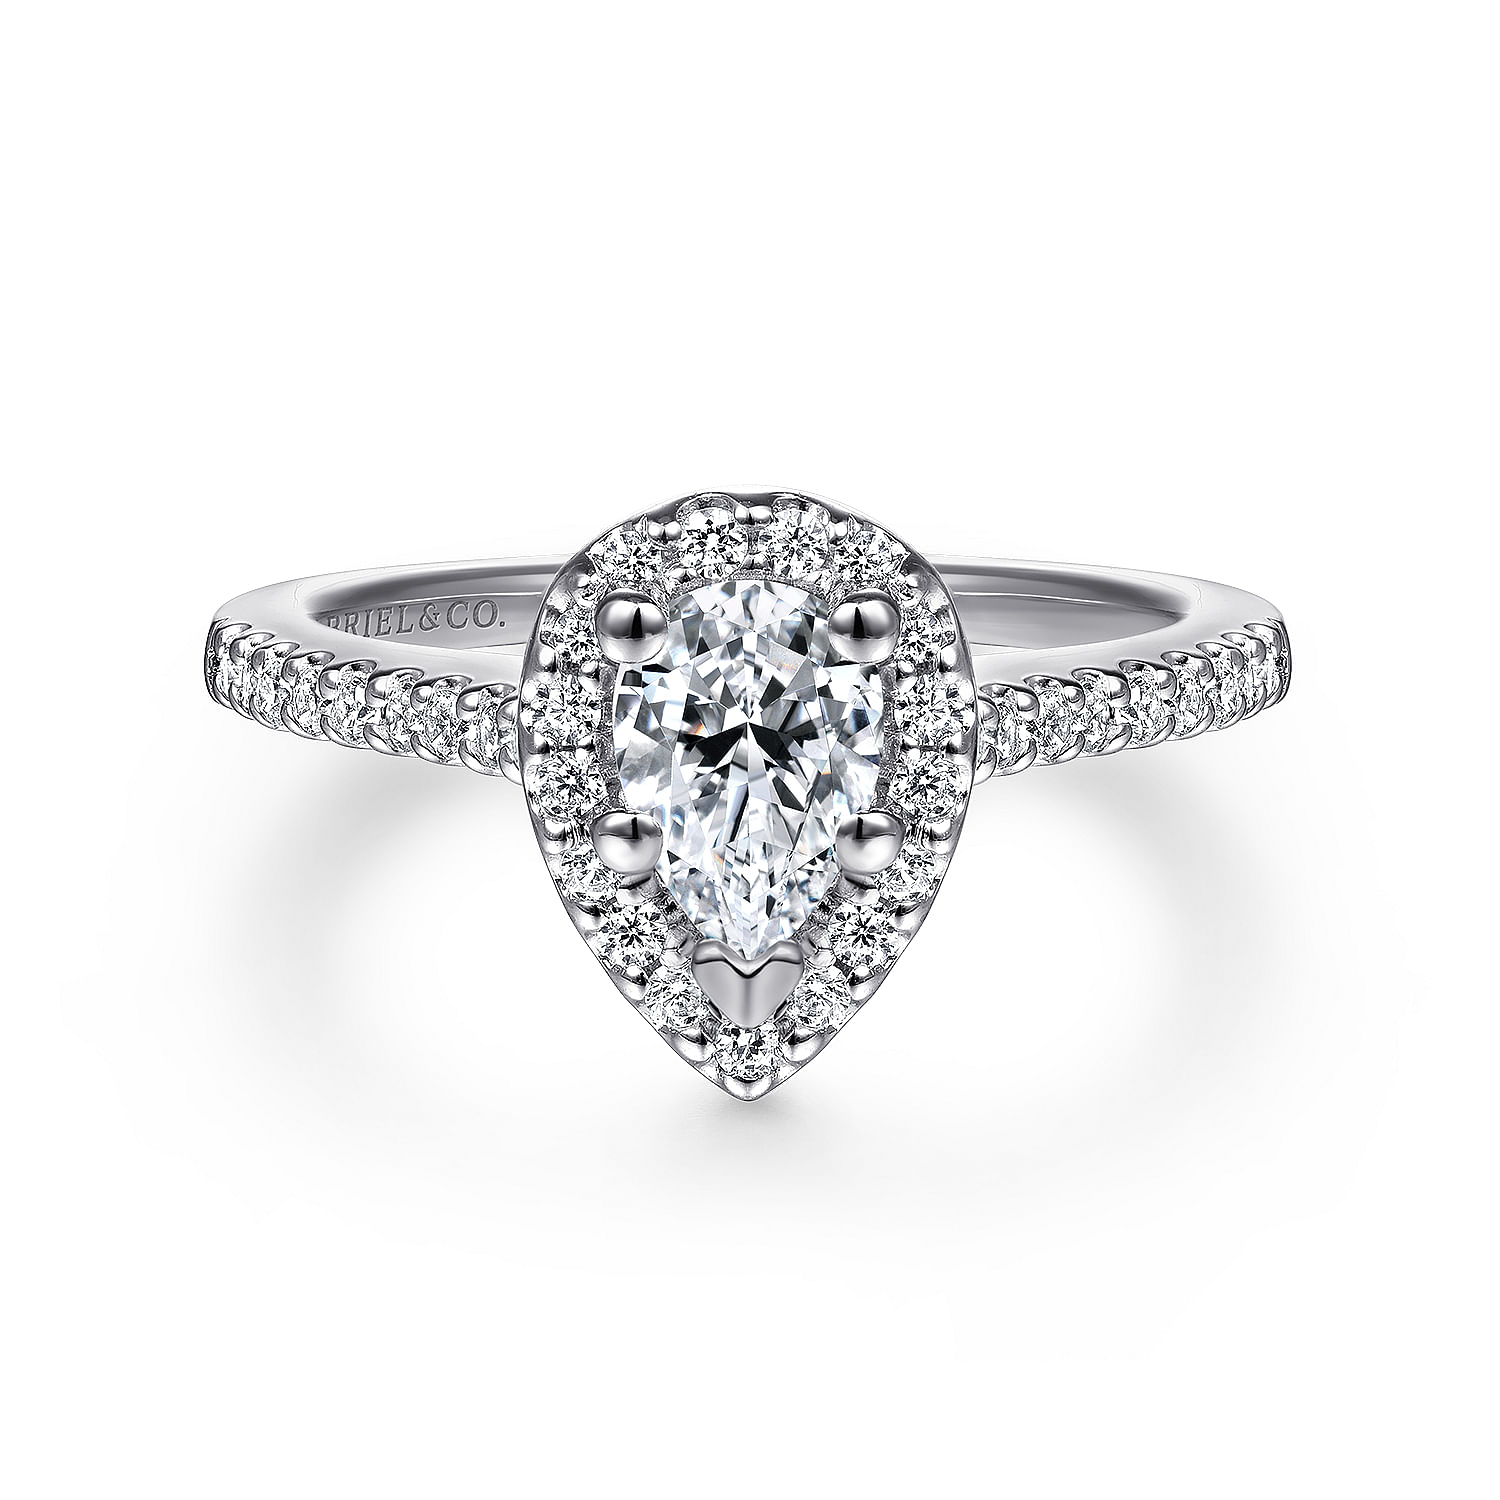 Paige - 14K White Gold Pear Shape Halo Diamond Engagement Ring